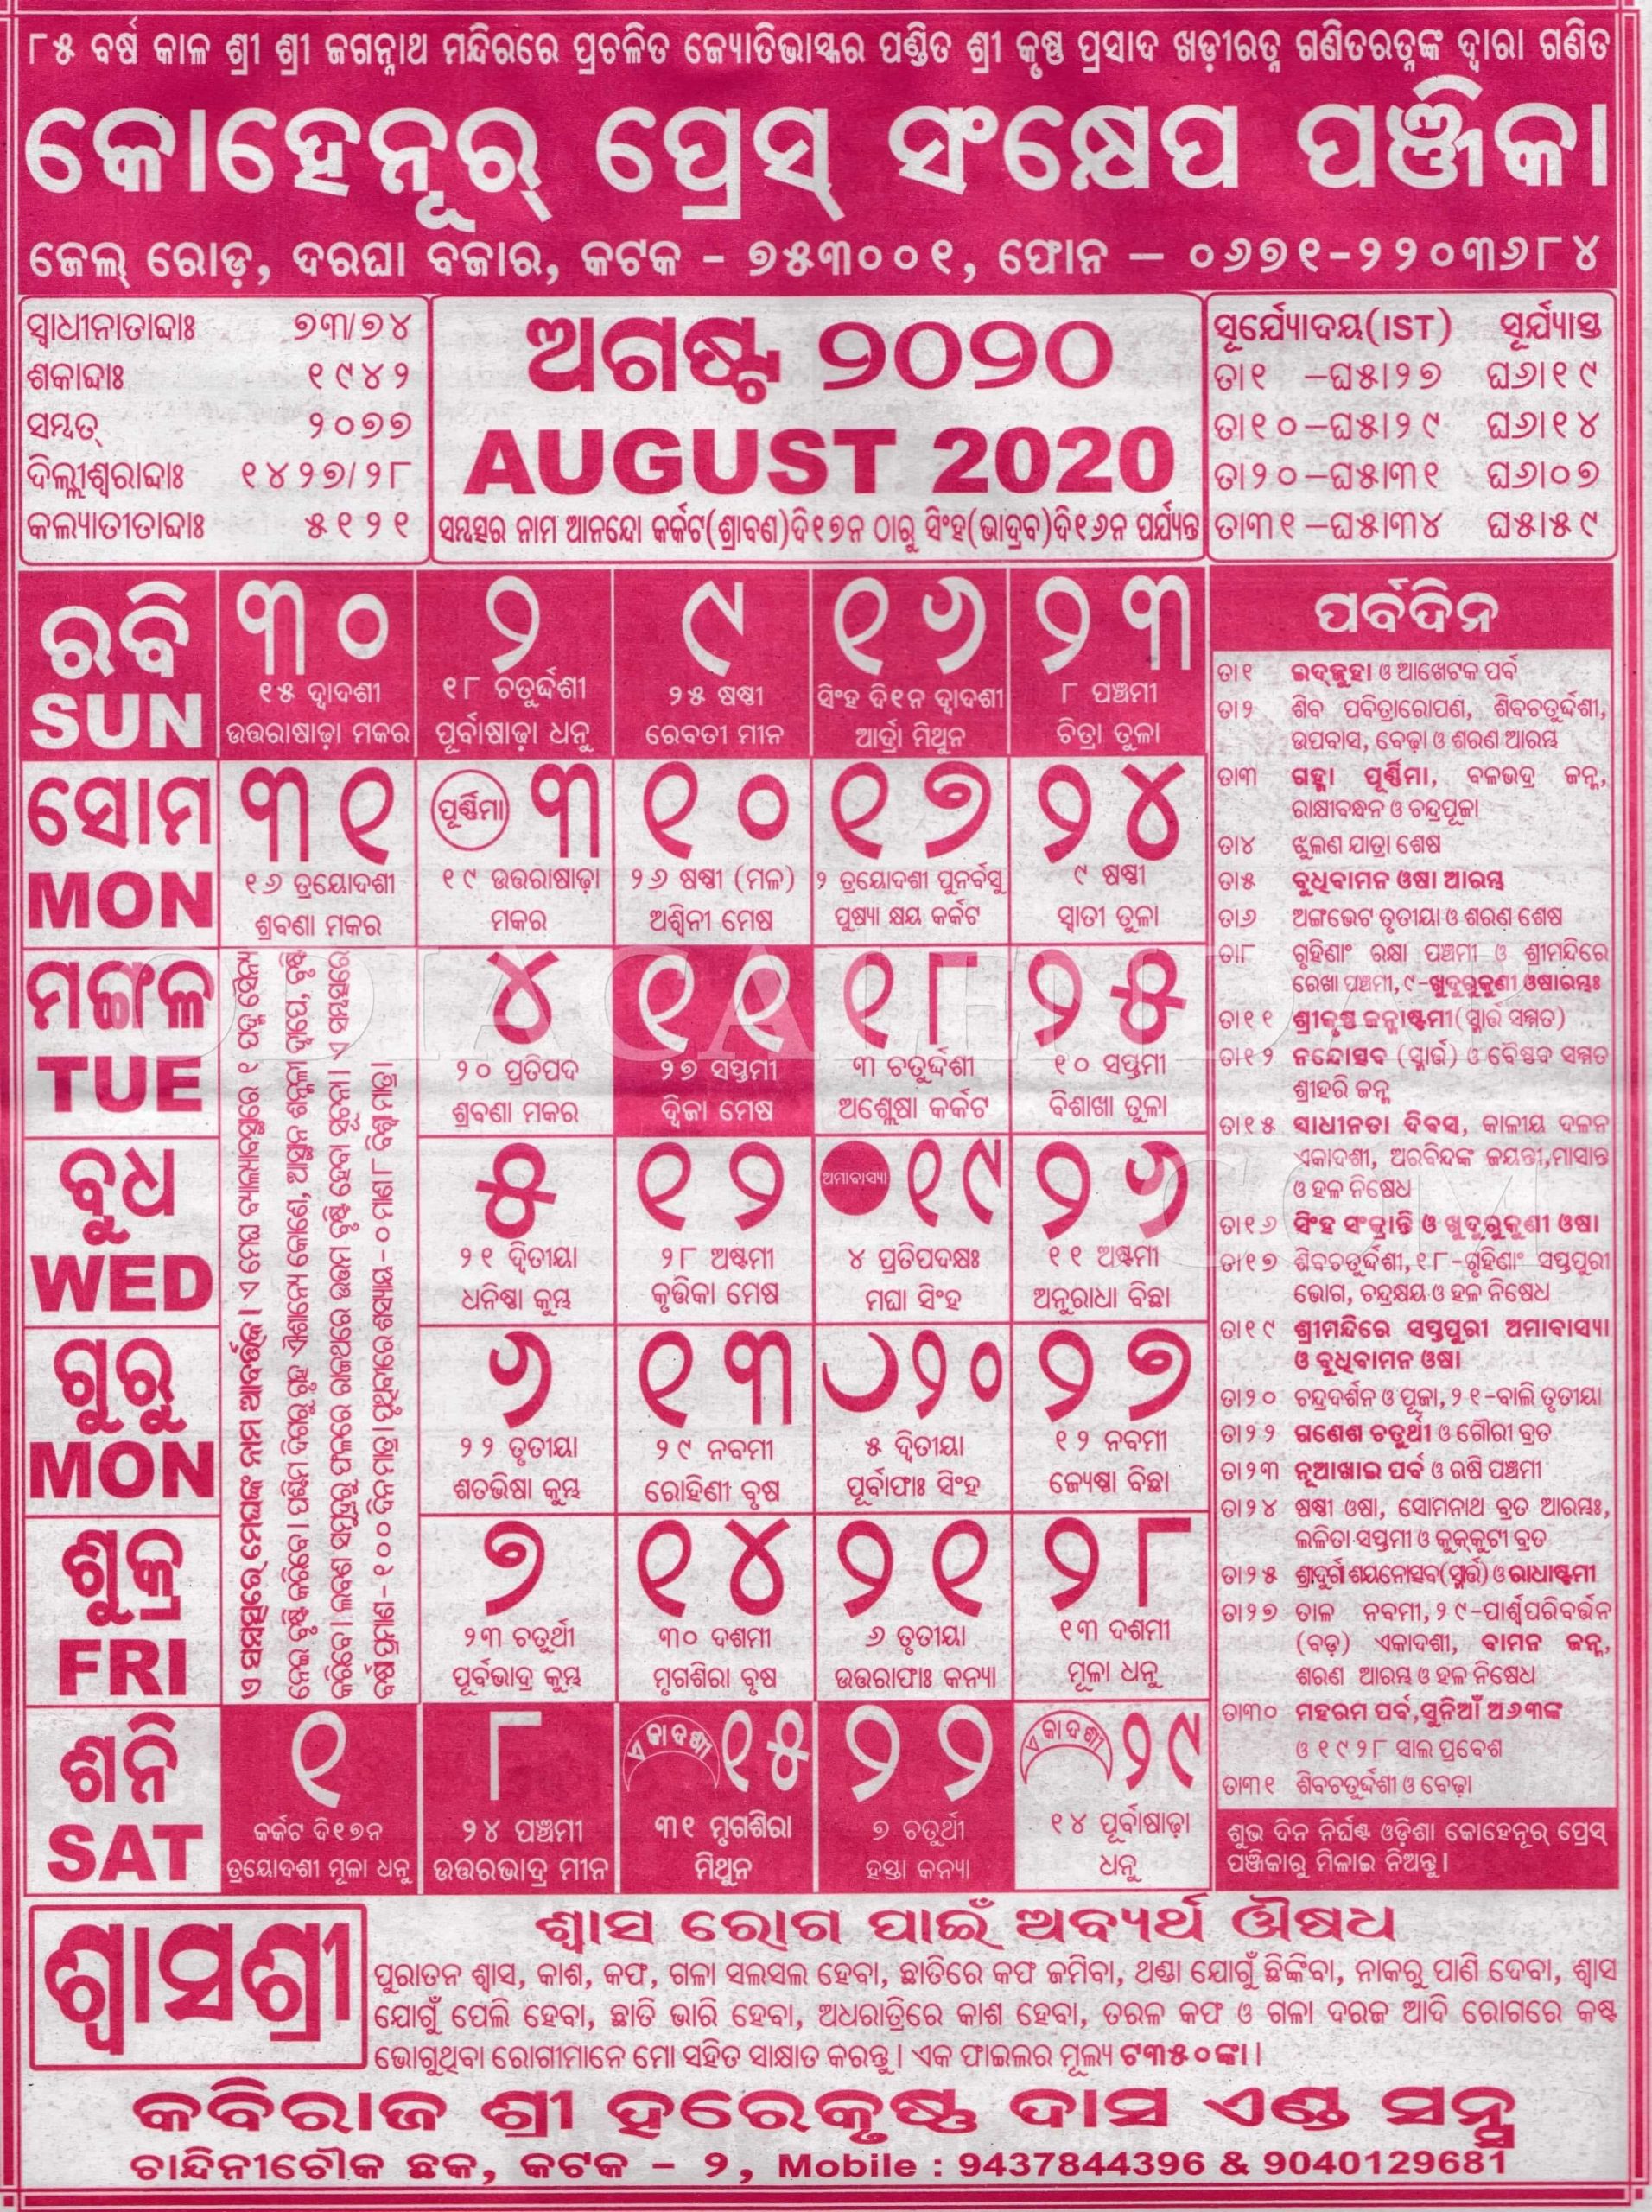 Kohinoor Odia Calendar August 2020 - Download Hd Quality